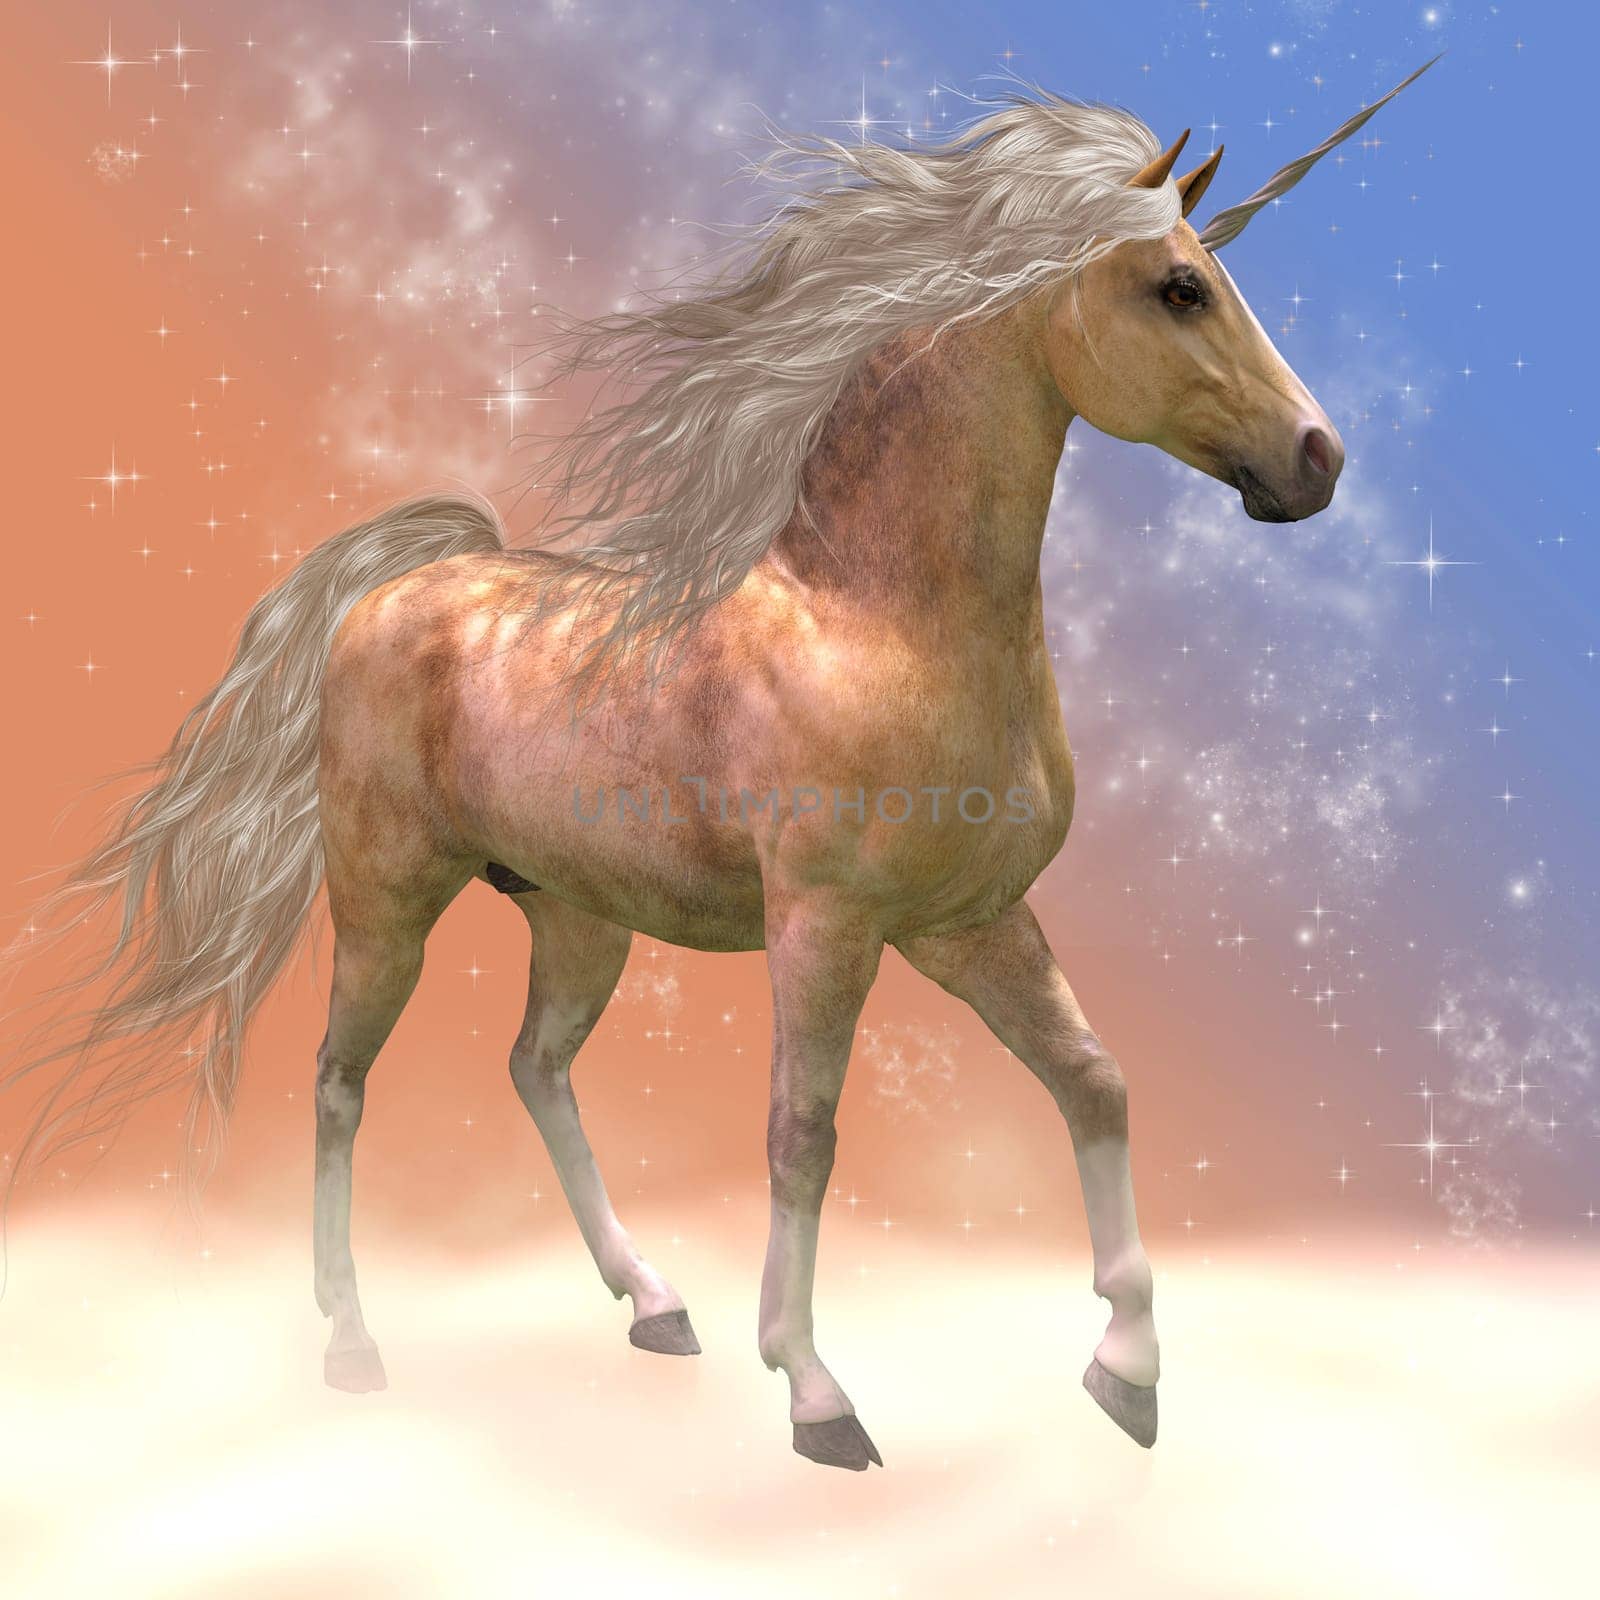 Starry Buttermilk Unicorn by Catmando